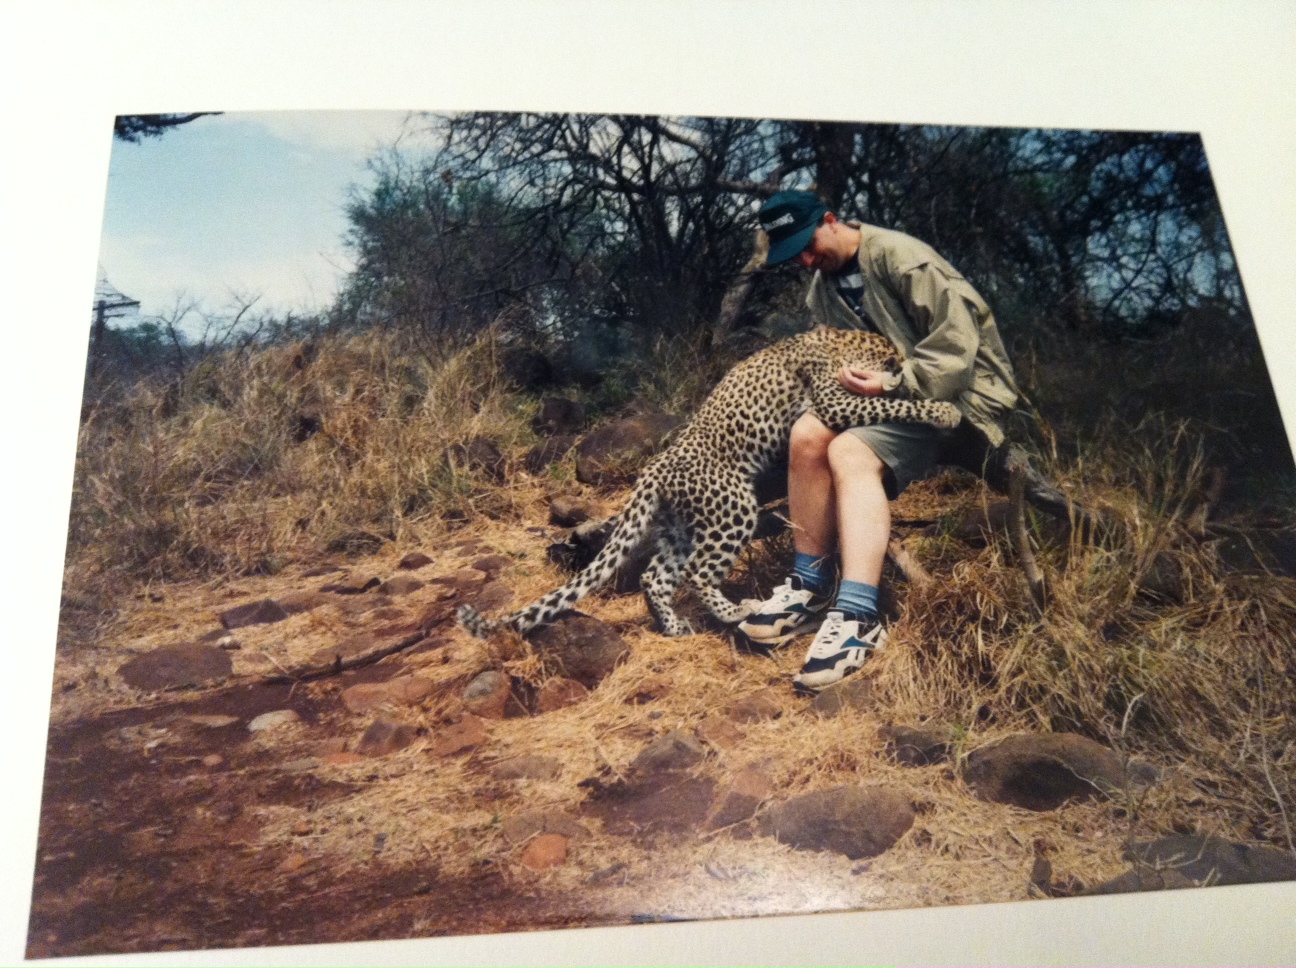 Cheetah on lap.